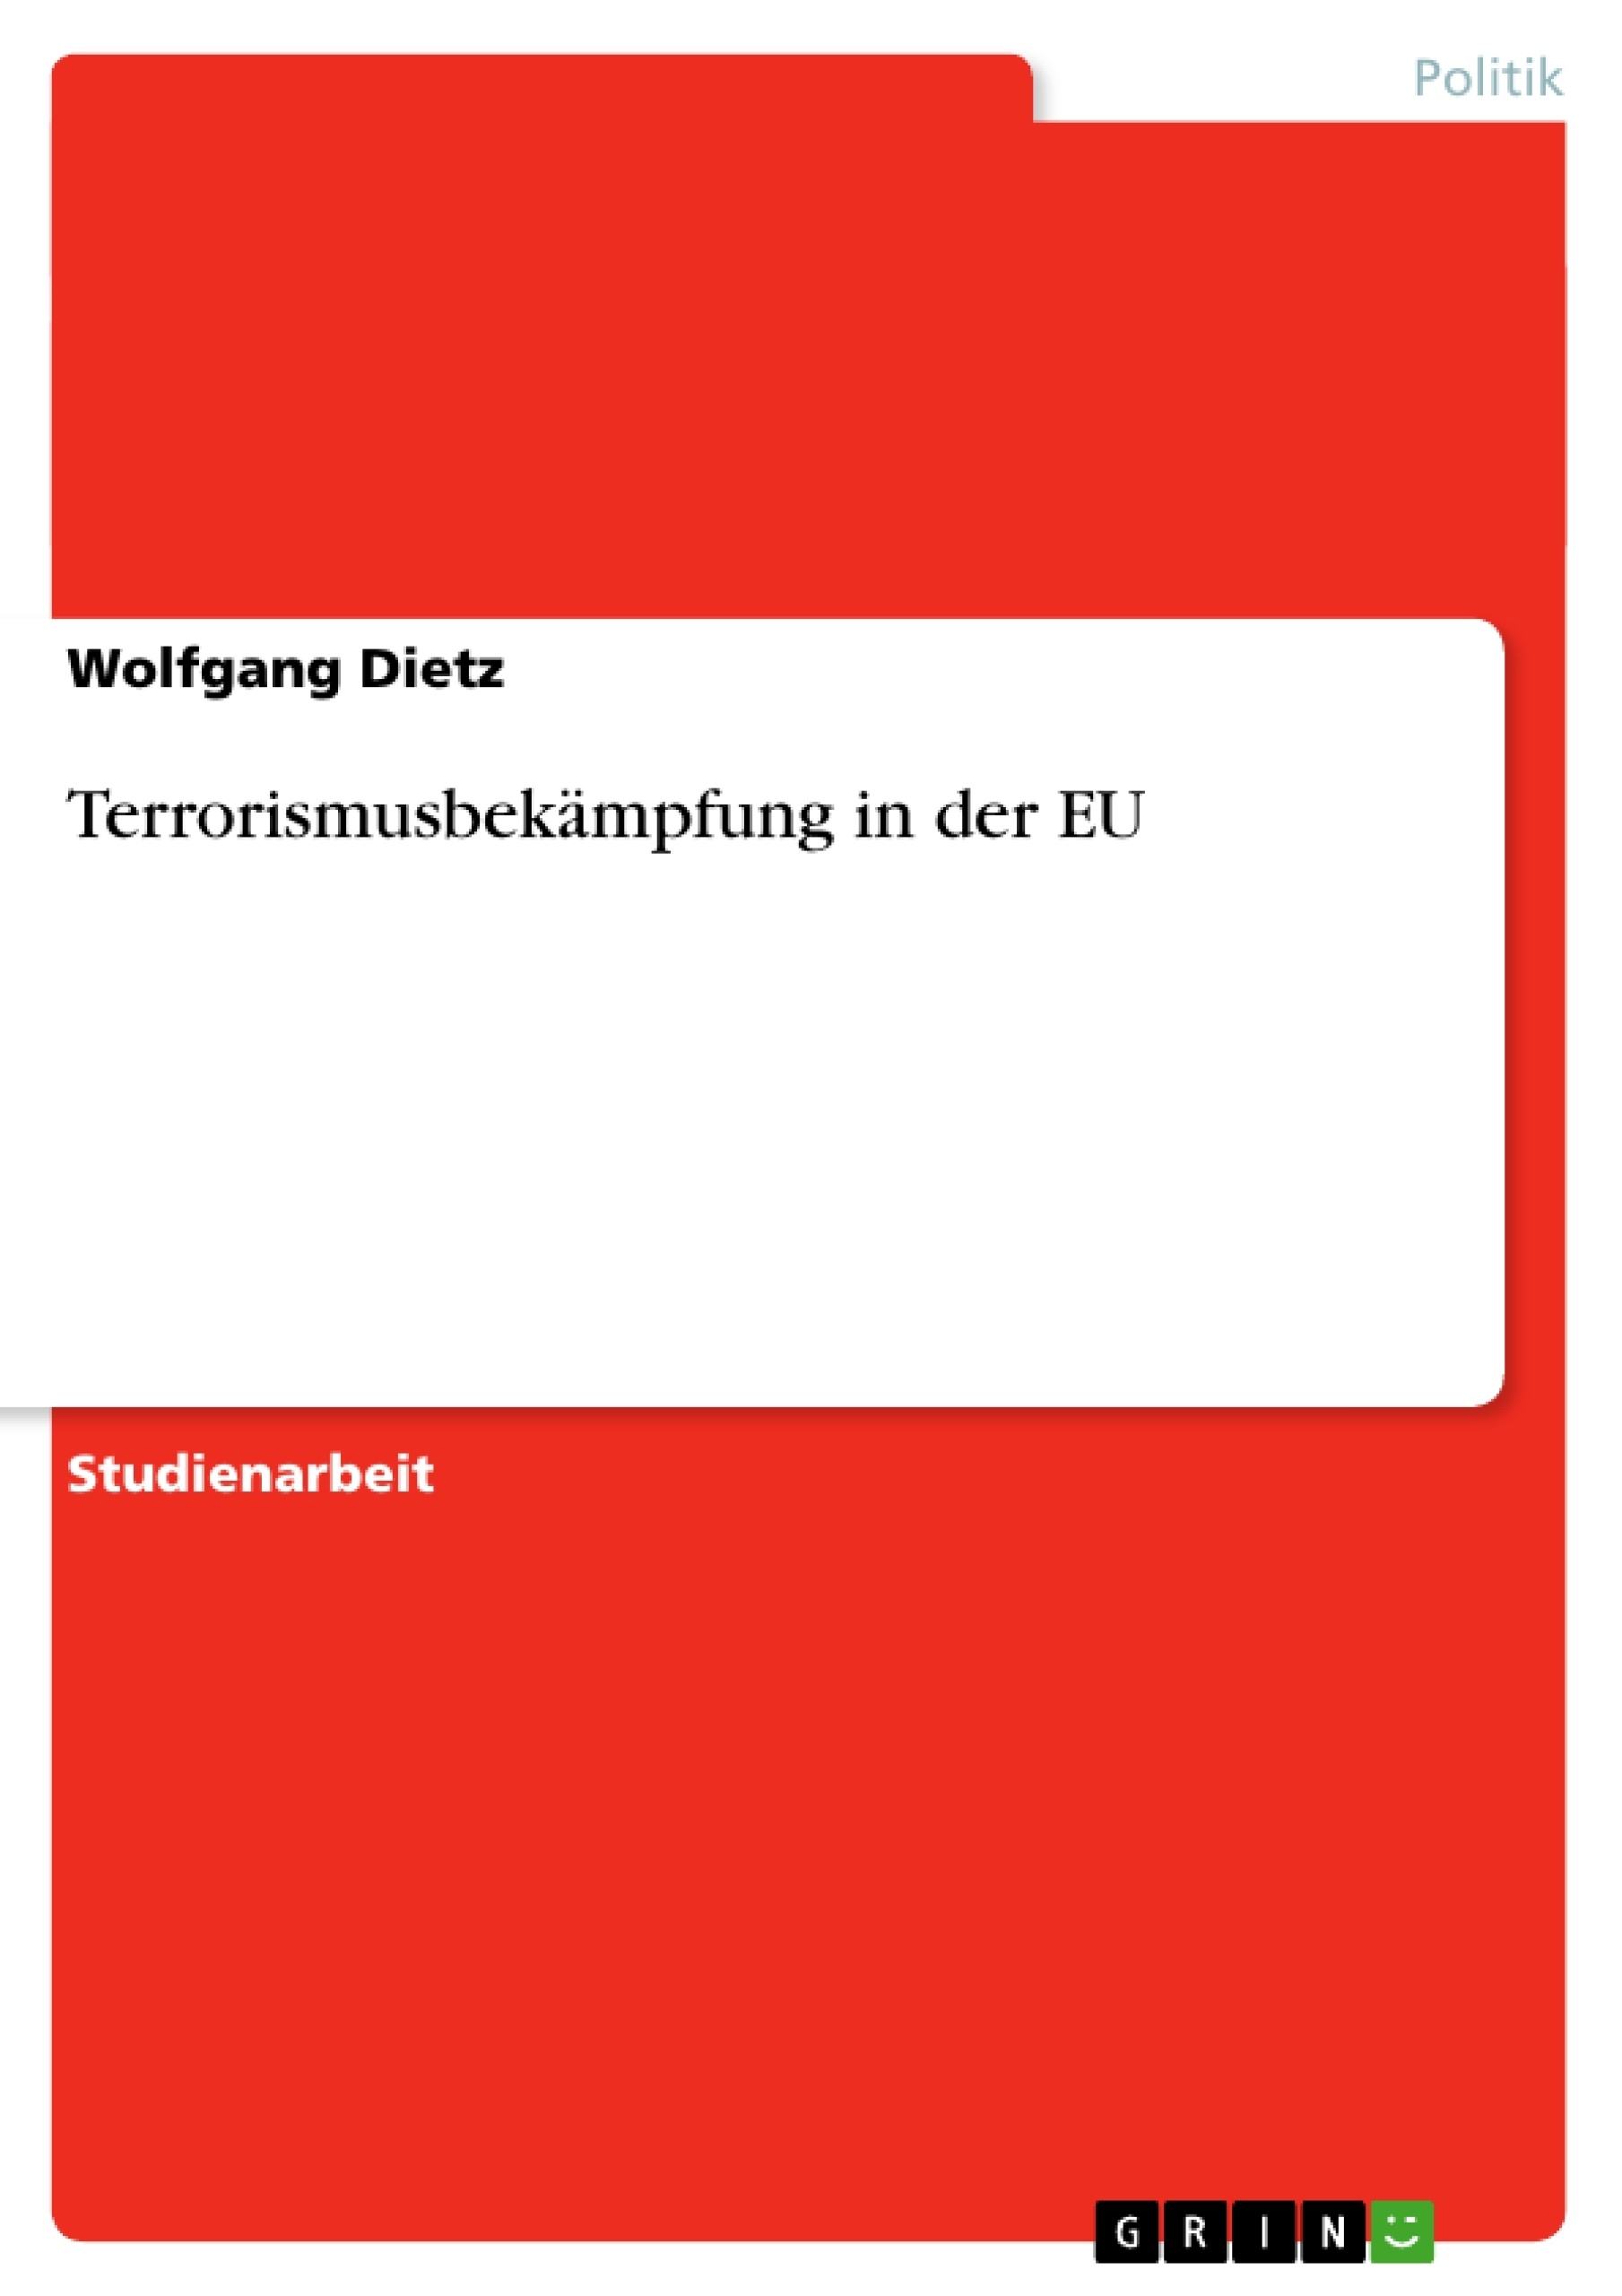 Titre: Terrorismusbekämpfung in der EU